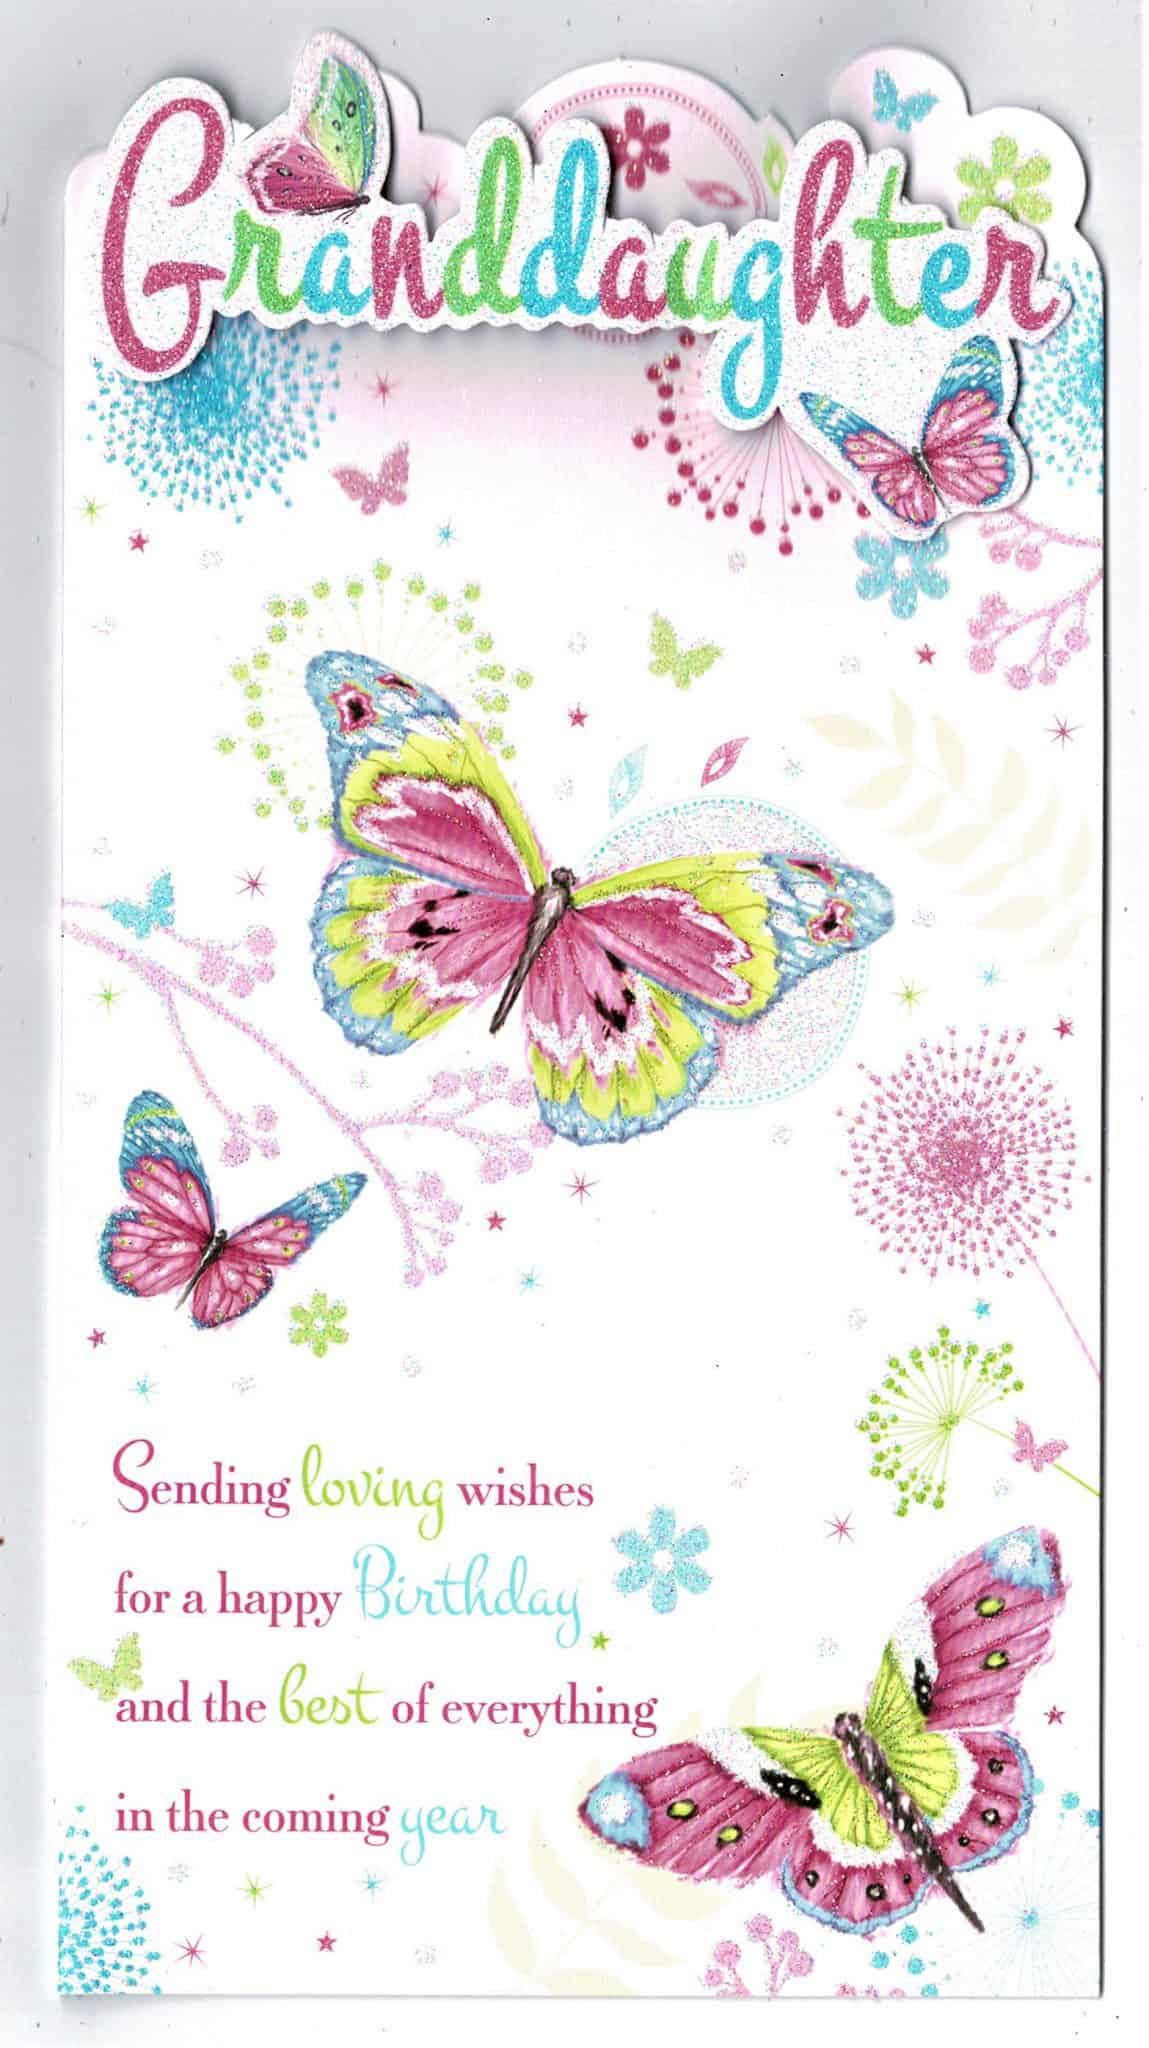 Granddaughter Birthday Card 'Granddaughter Sending Loving Wishes For A